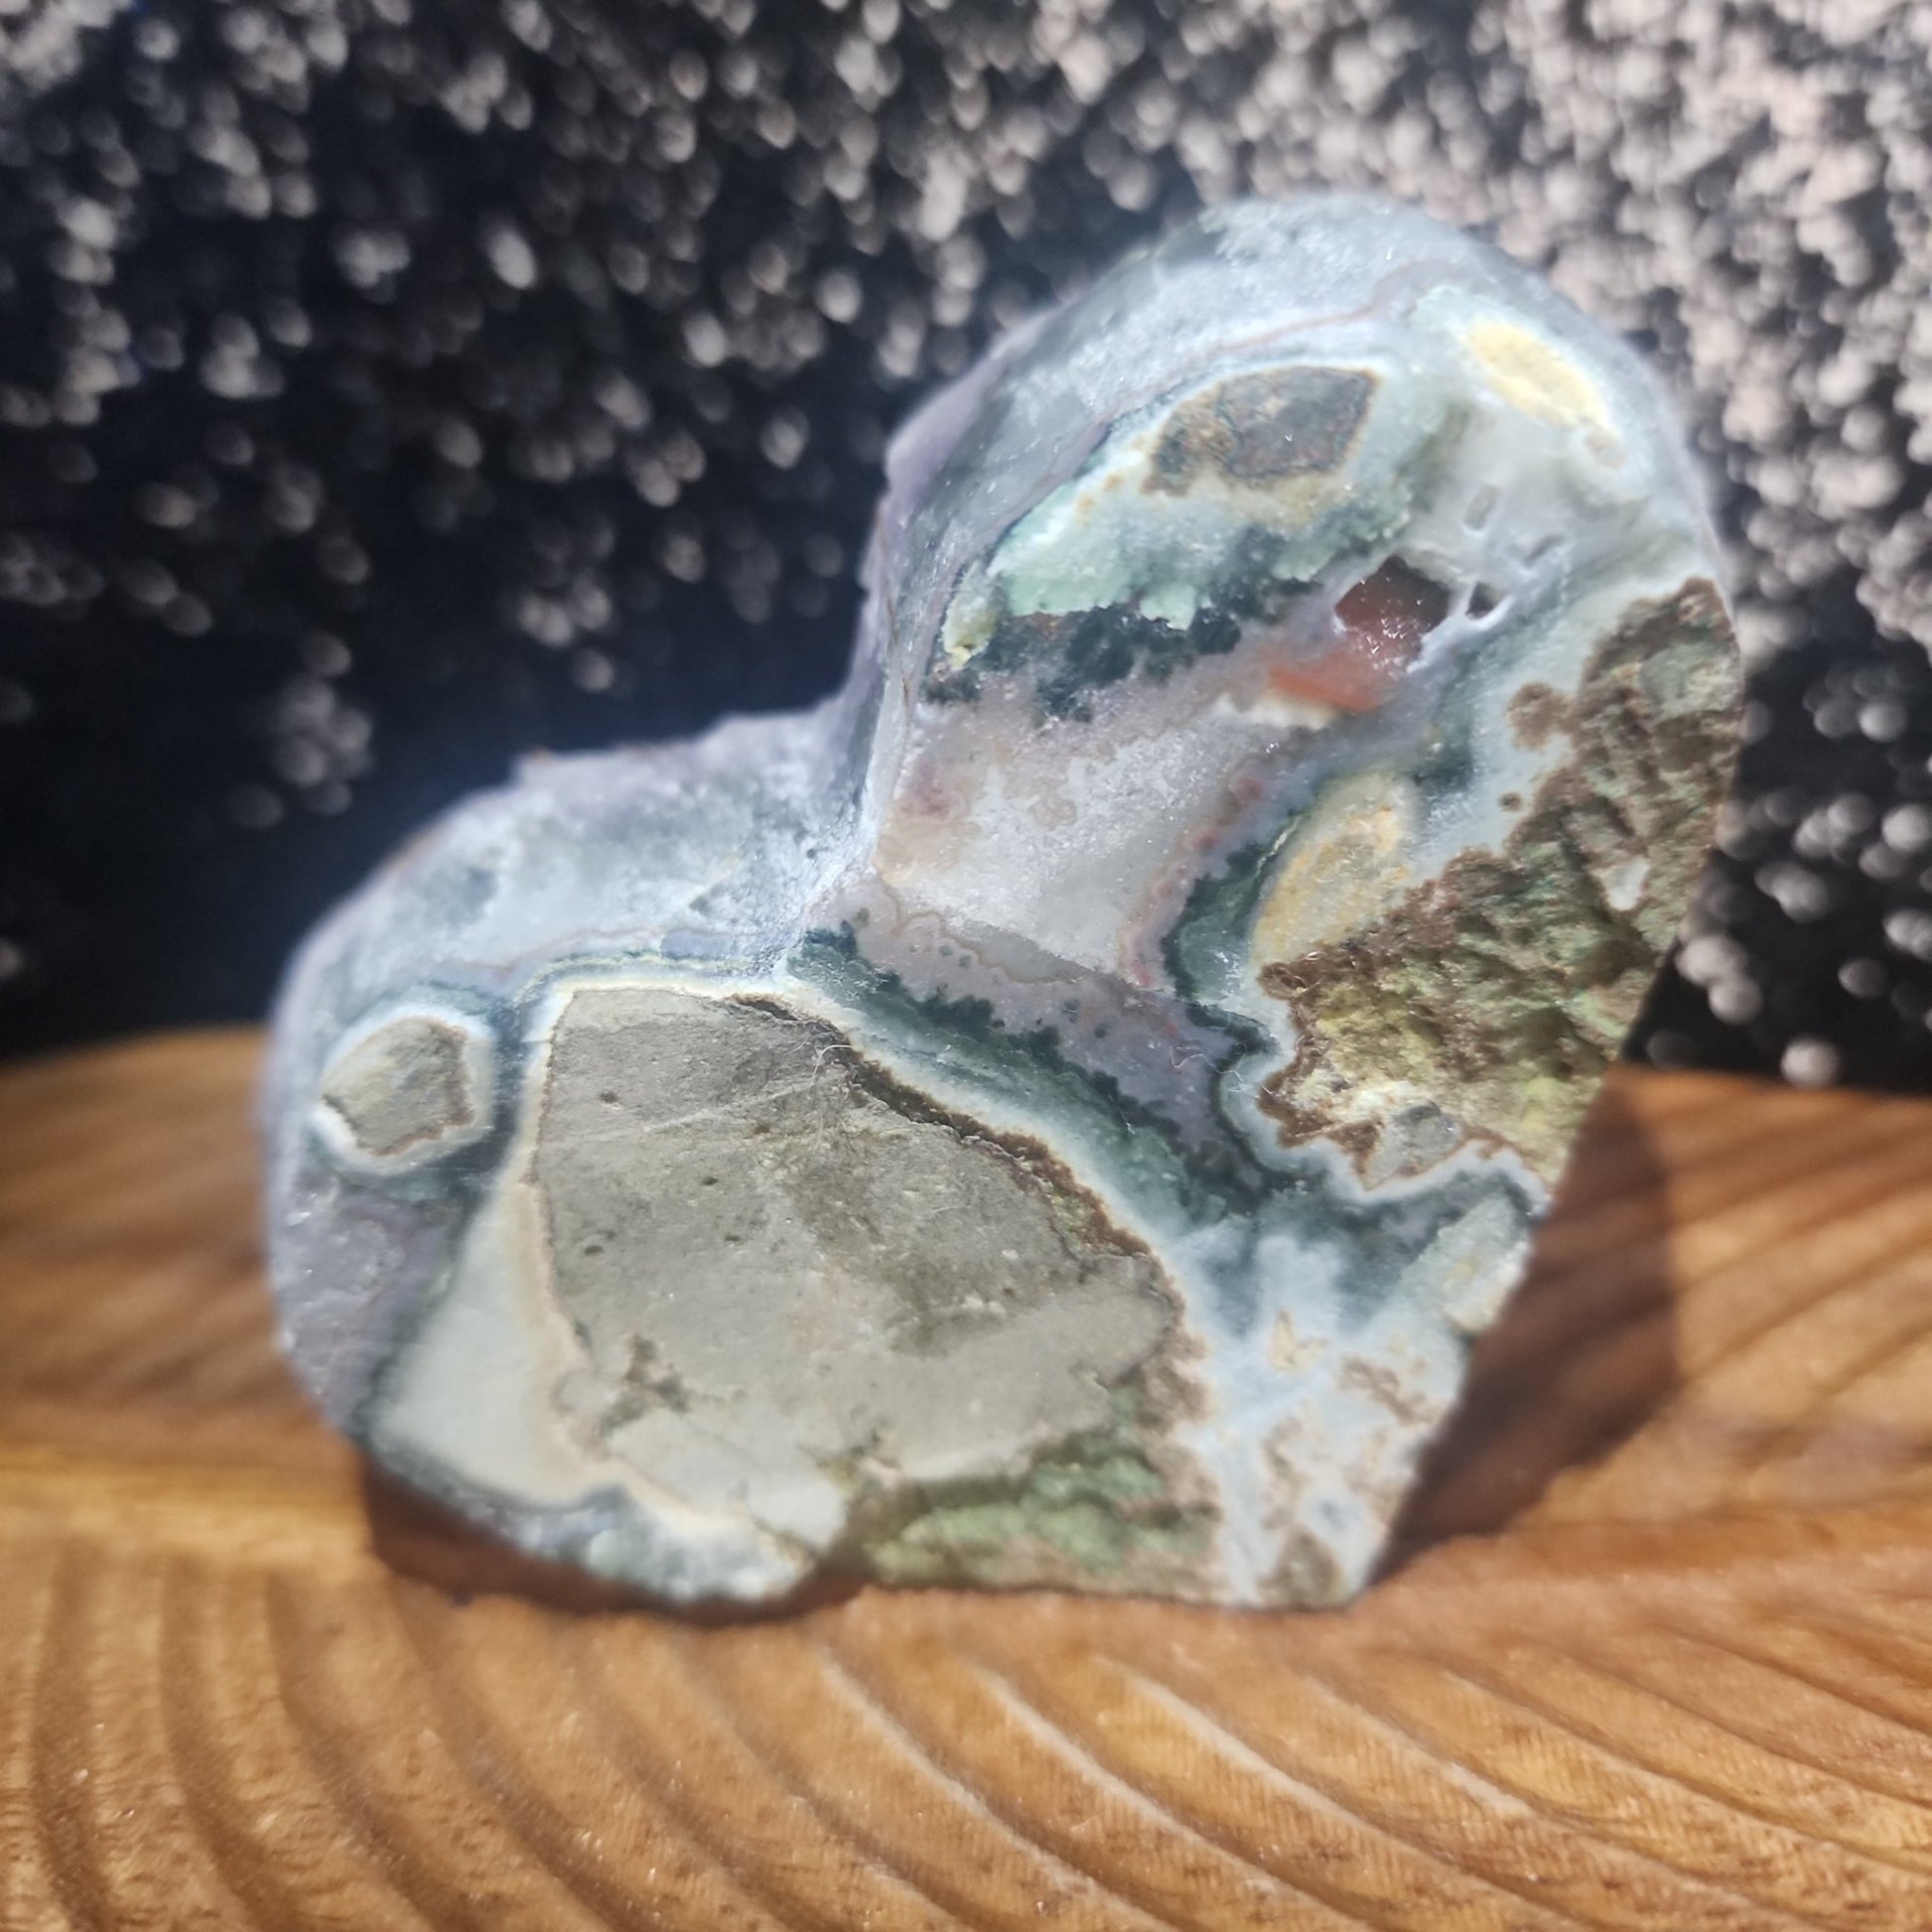 Amethyst Heart - MagicBox Crystals